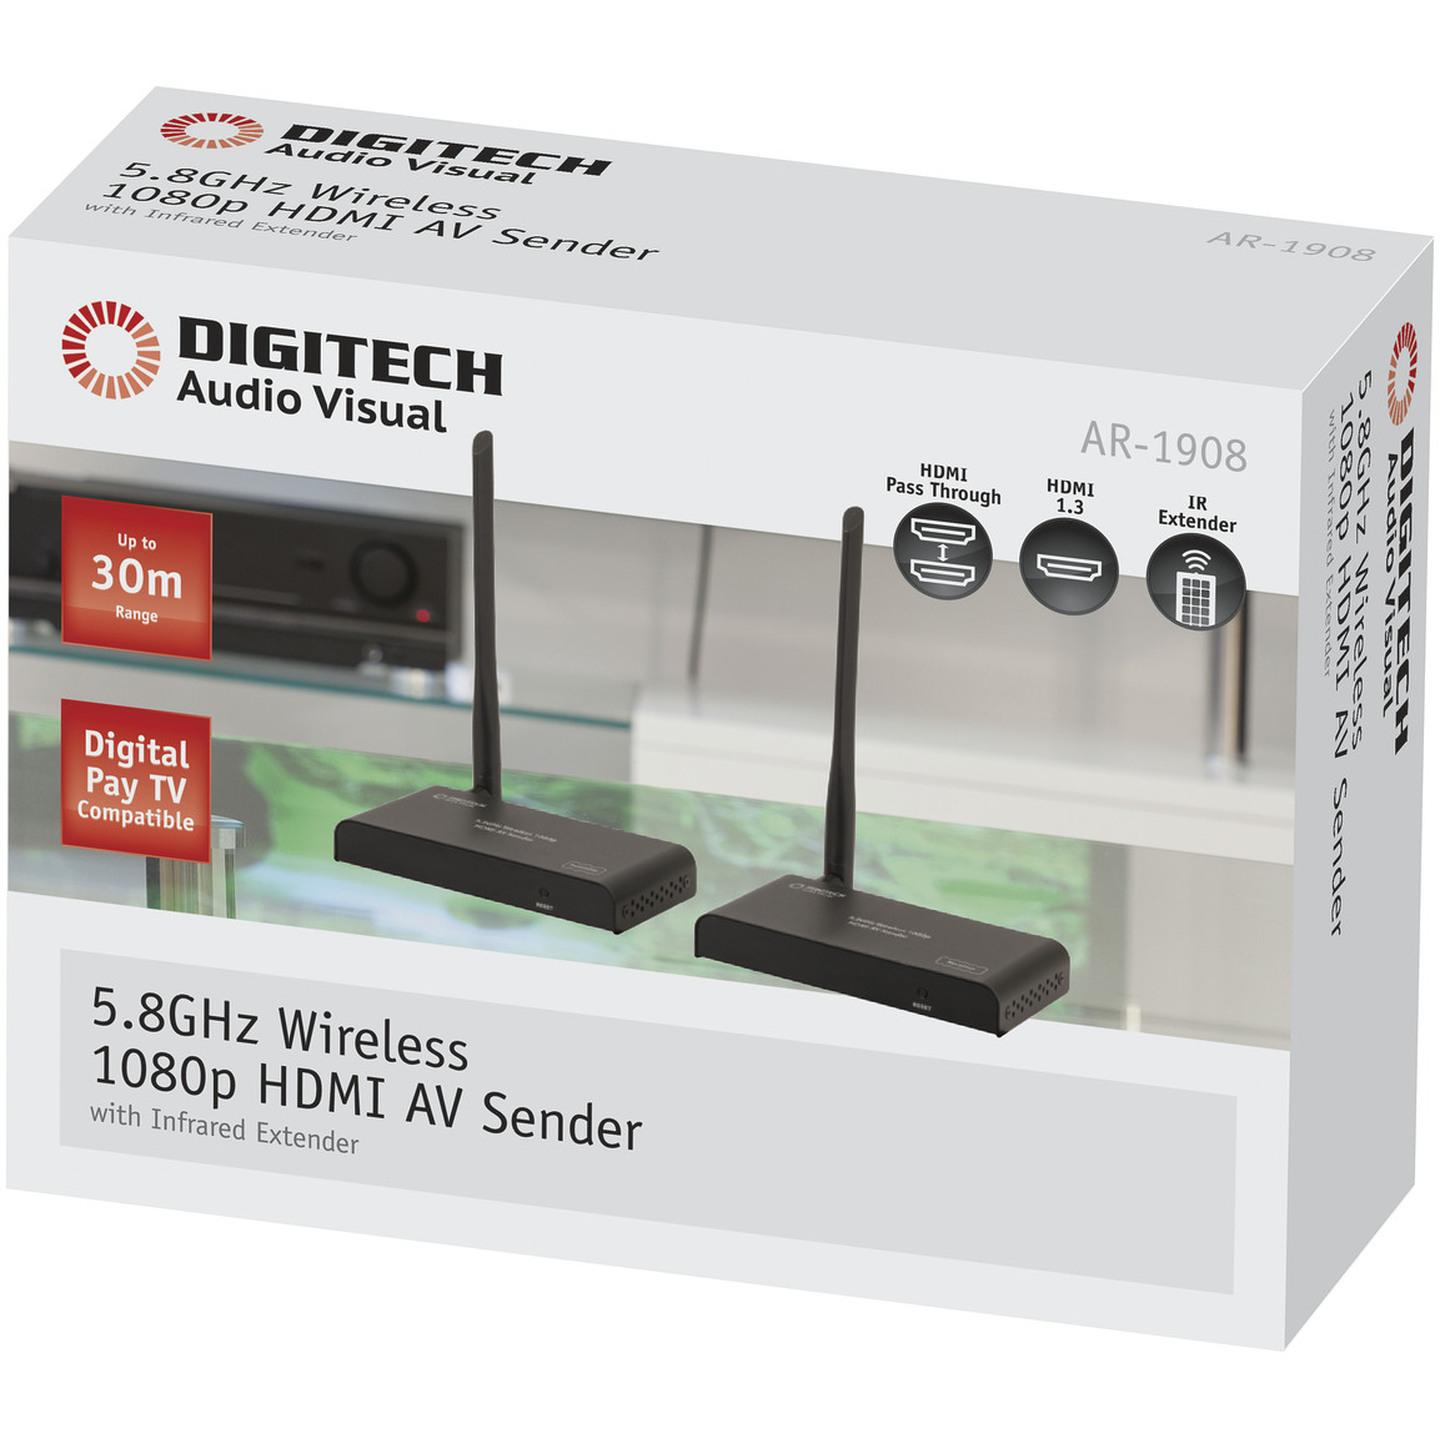 5.8GHz Wireless 1080p HDMI AV Sender